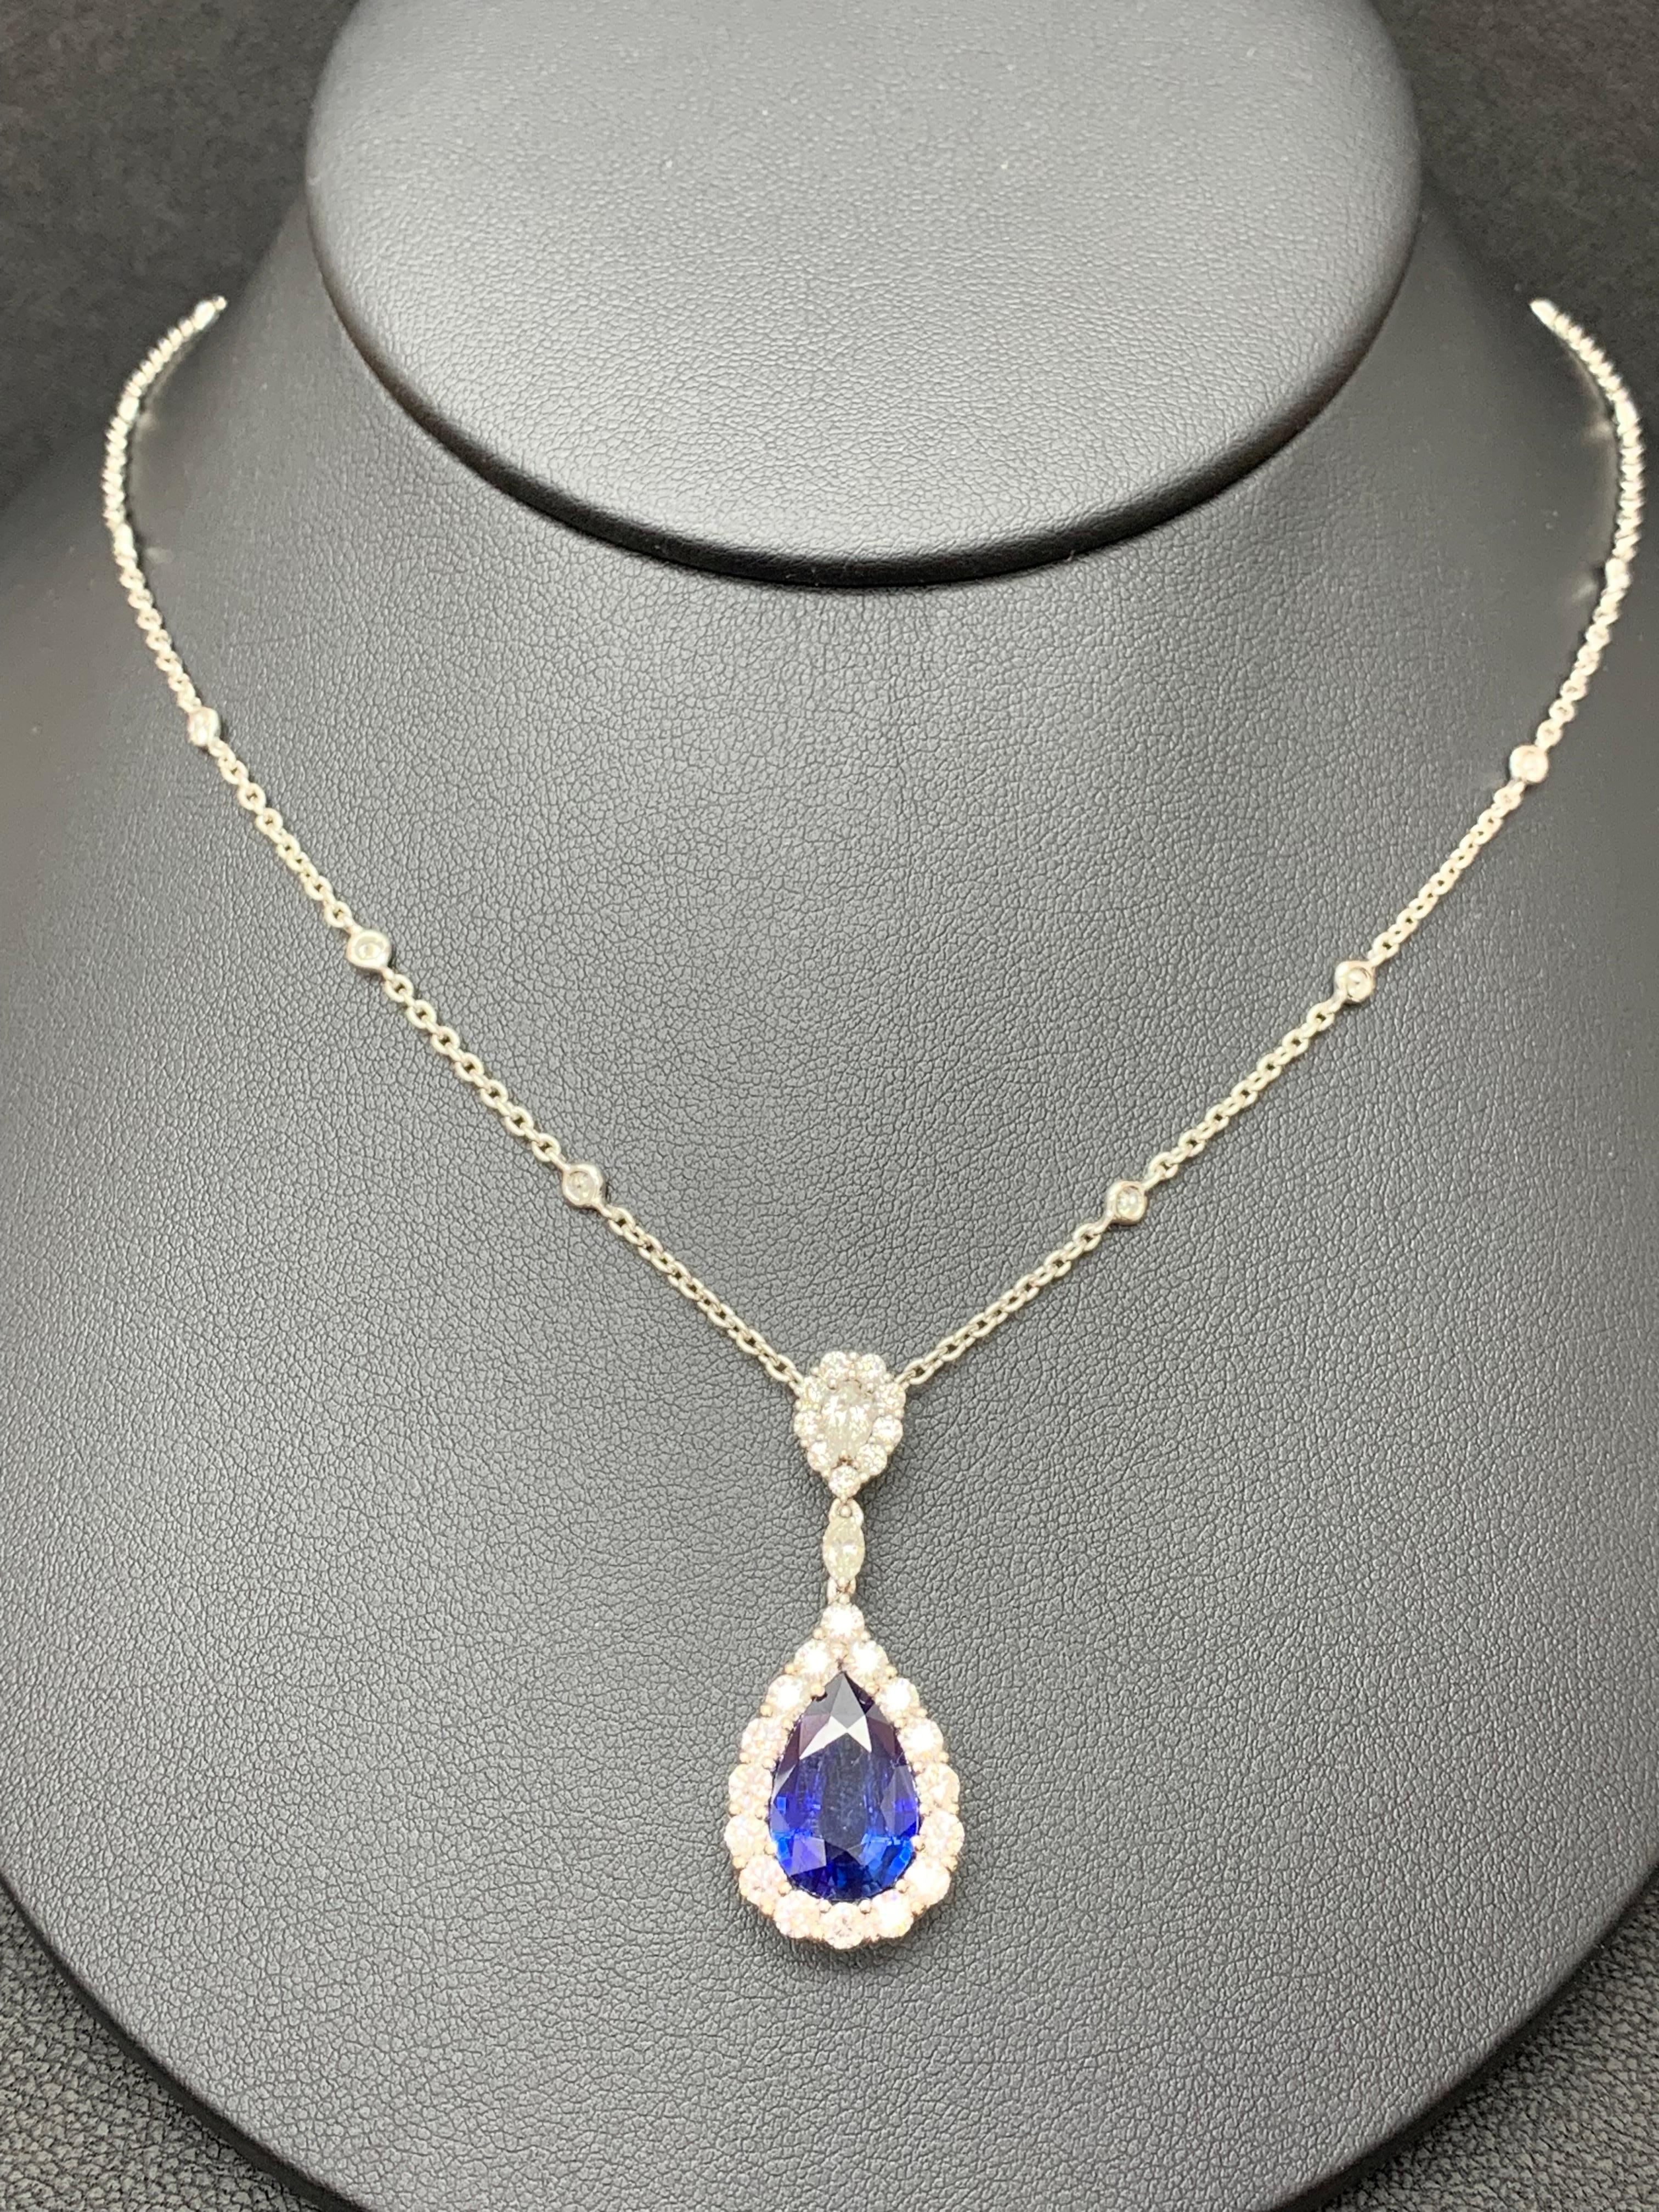 5.10 Carat Pear Shape Blue Saphire and Diamond Halo Drop Pendant Necklace For Sale 4